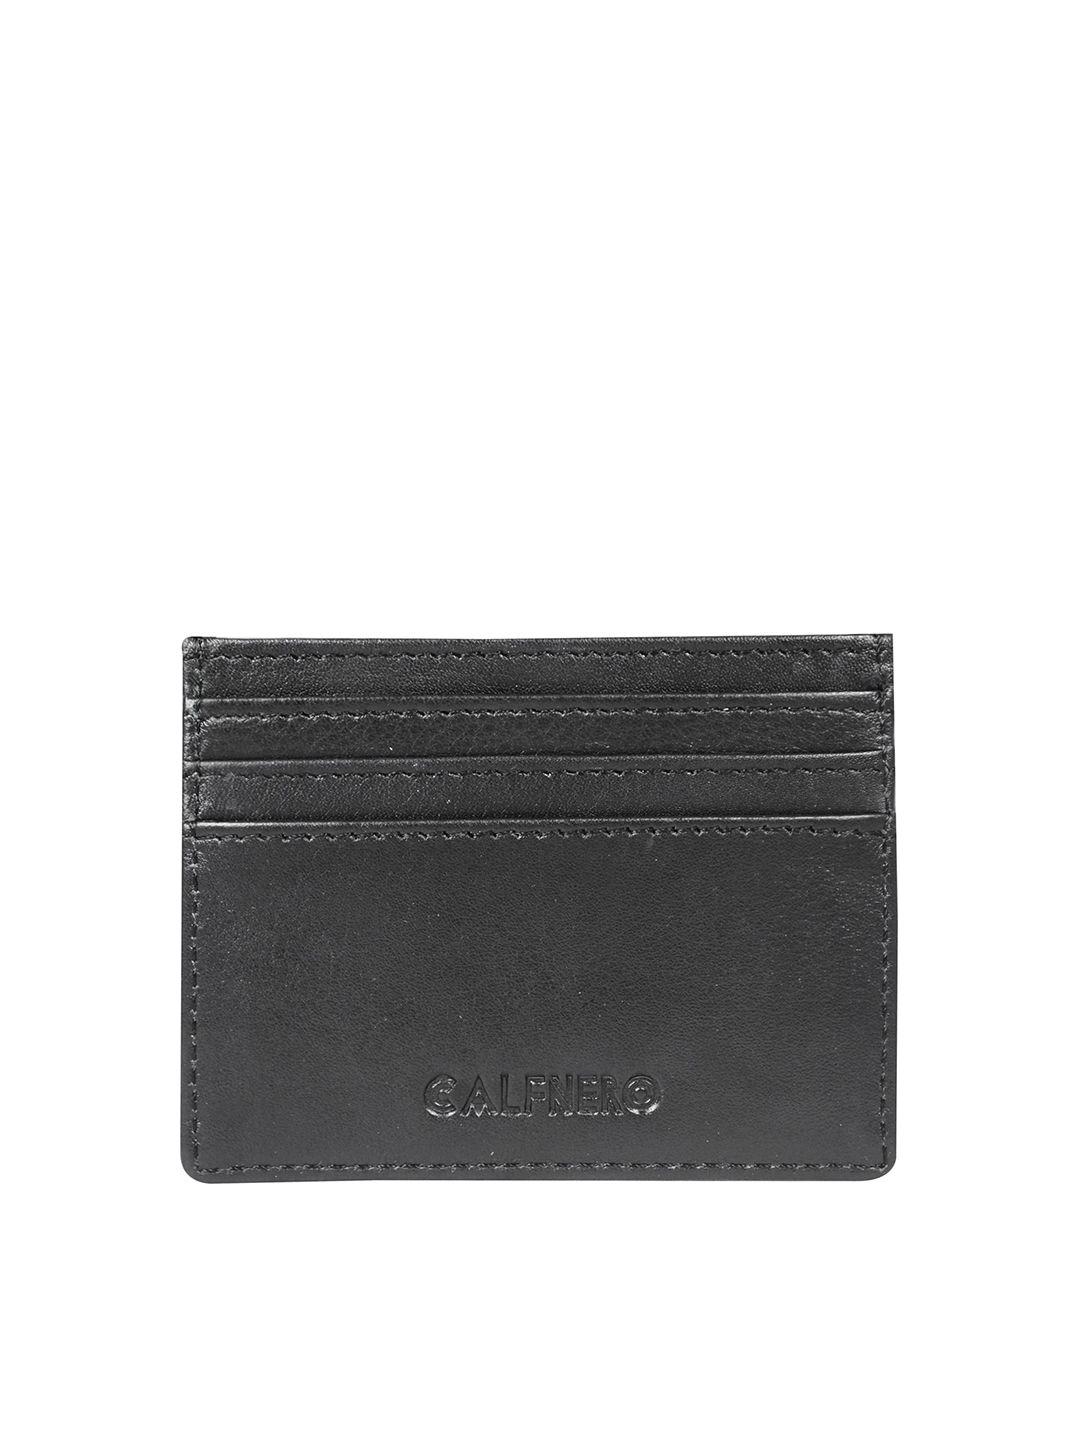 calfnero unisex leather card holder